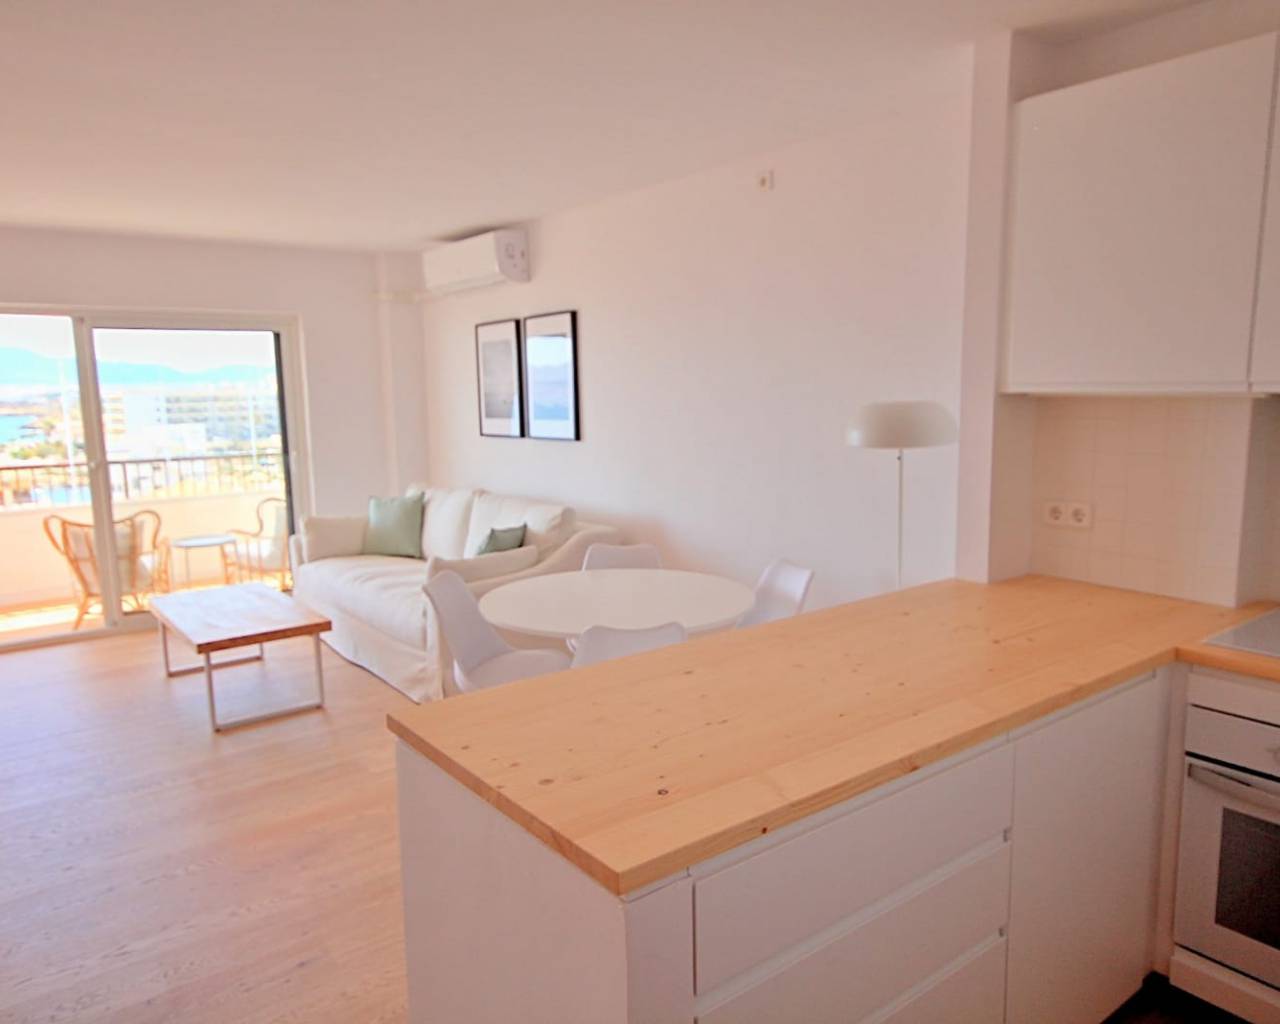 Flat for rent in Can Pastilla, Palma de Mallorca